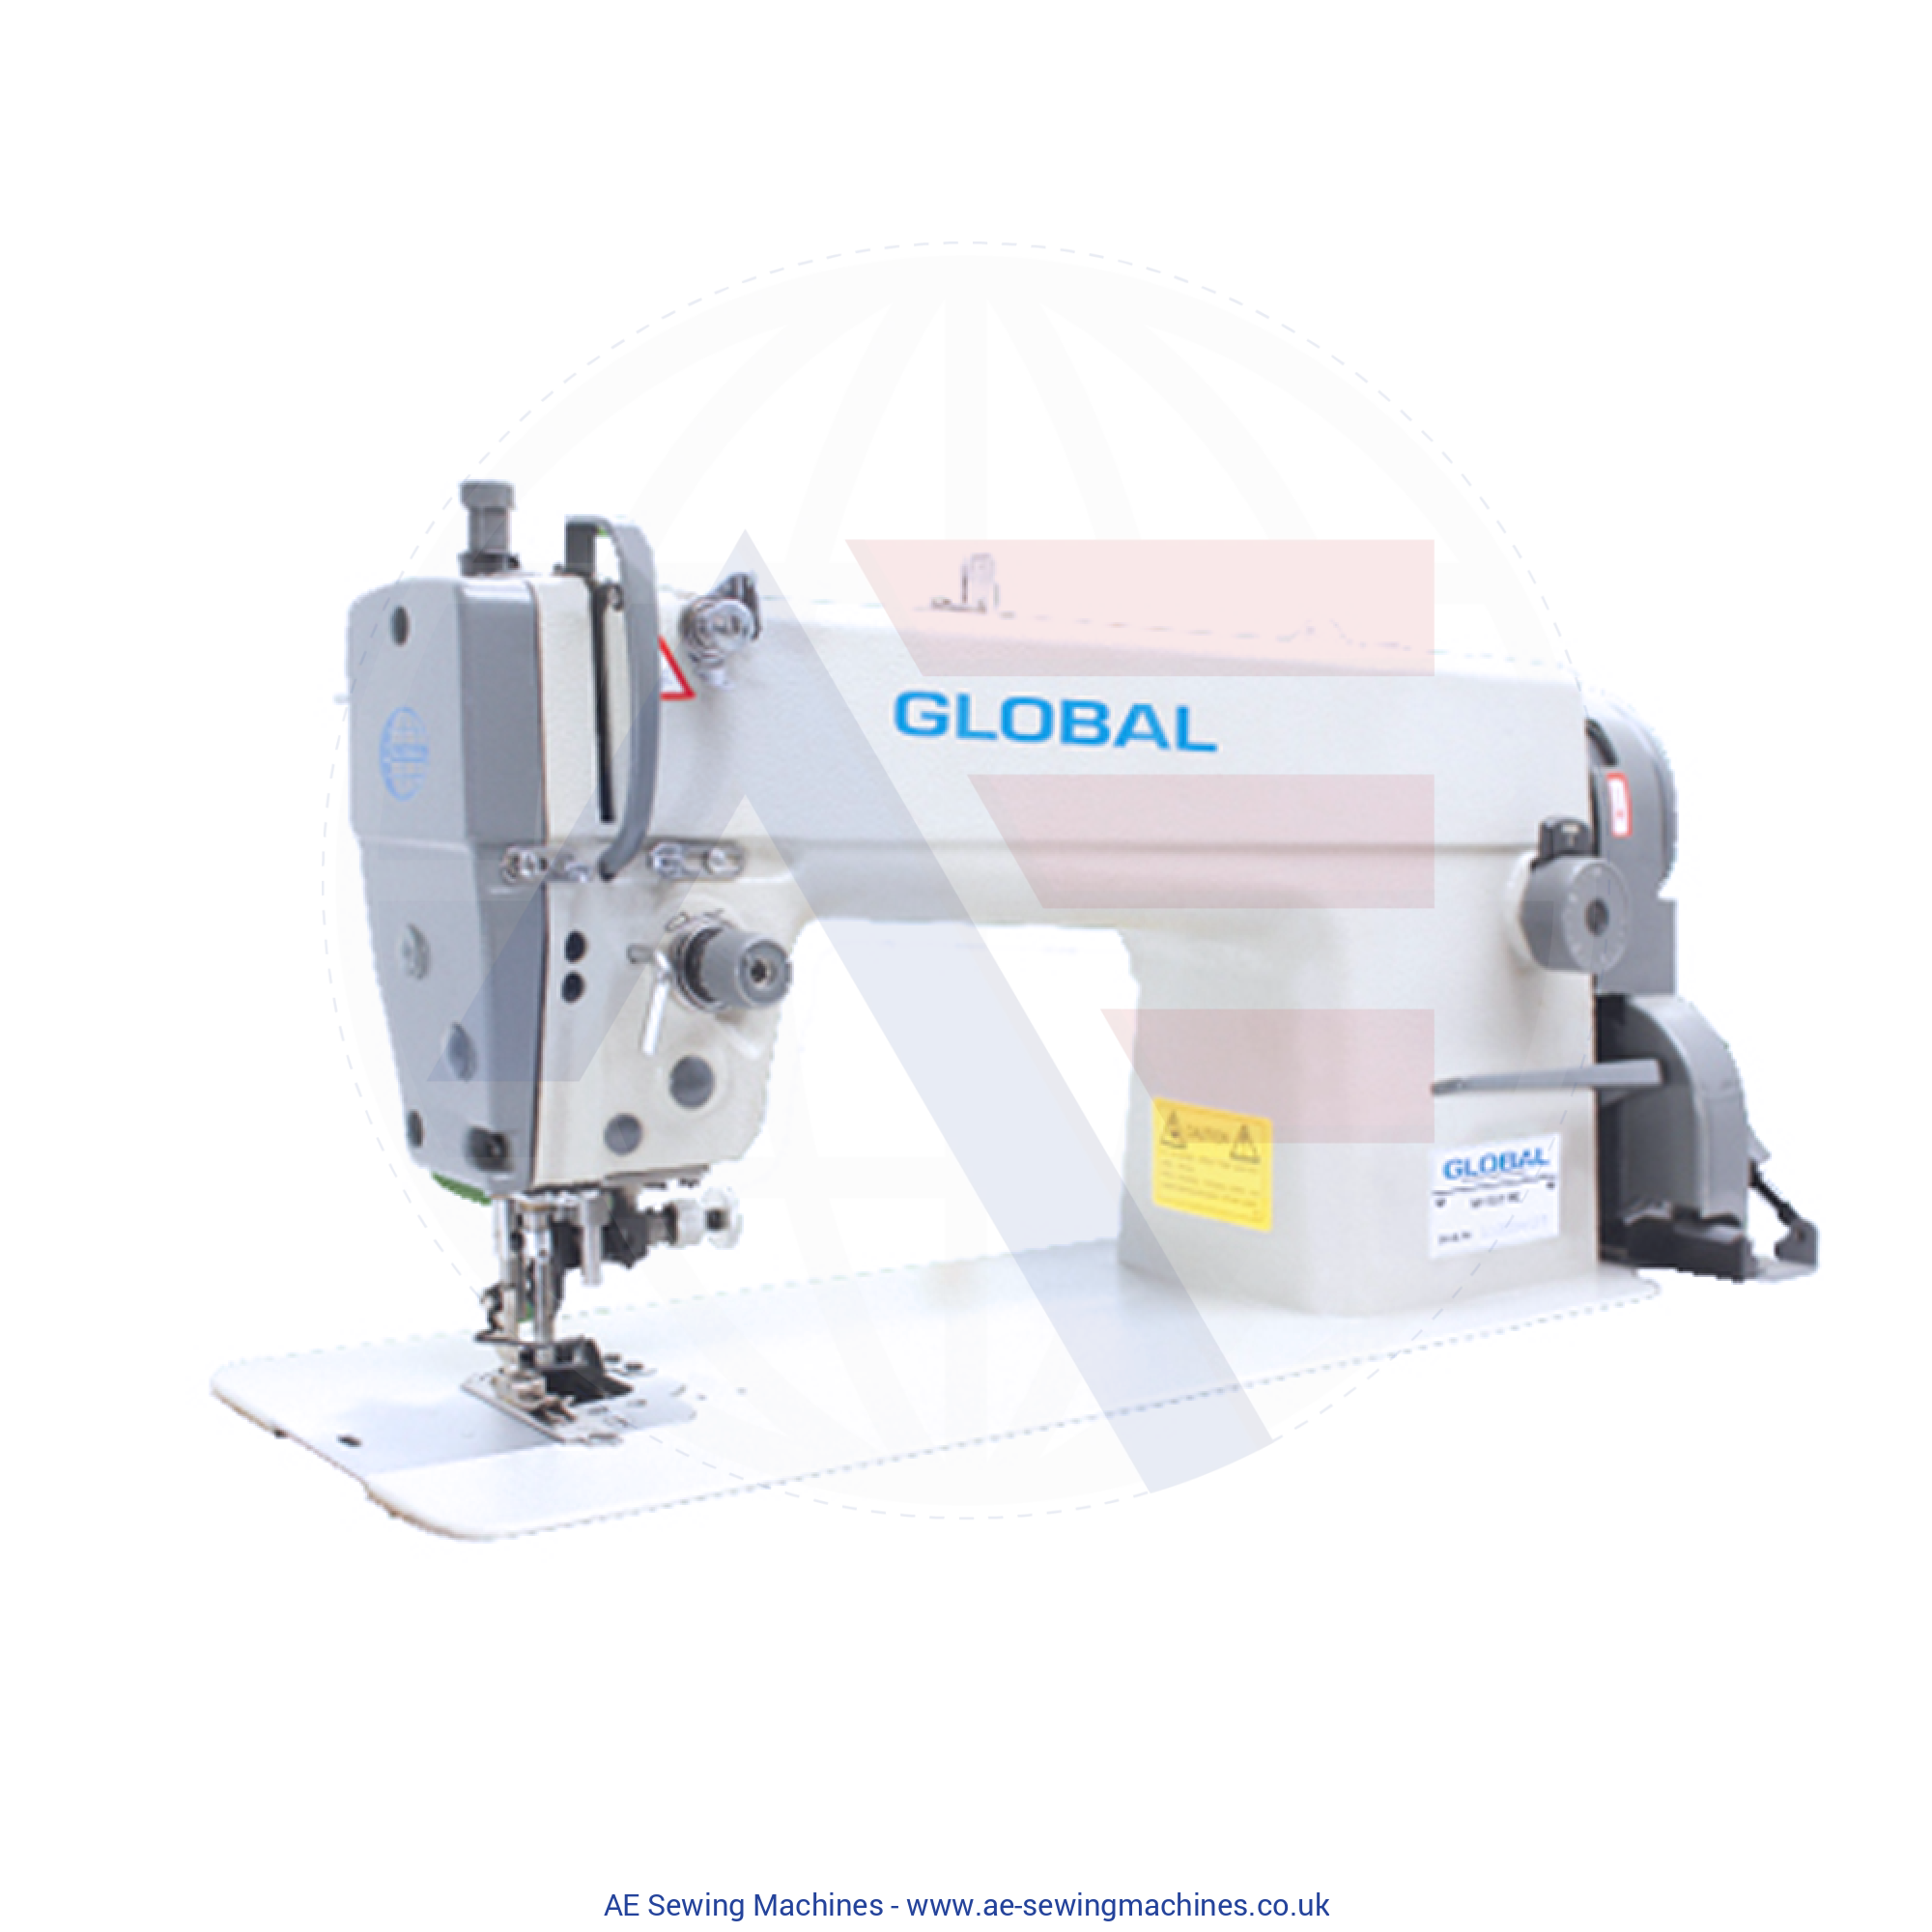 Global Nf 331 Series Needle-Feed Lockstitch Machine Sewing Machines